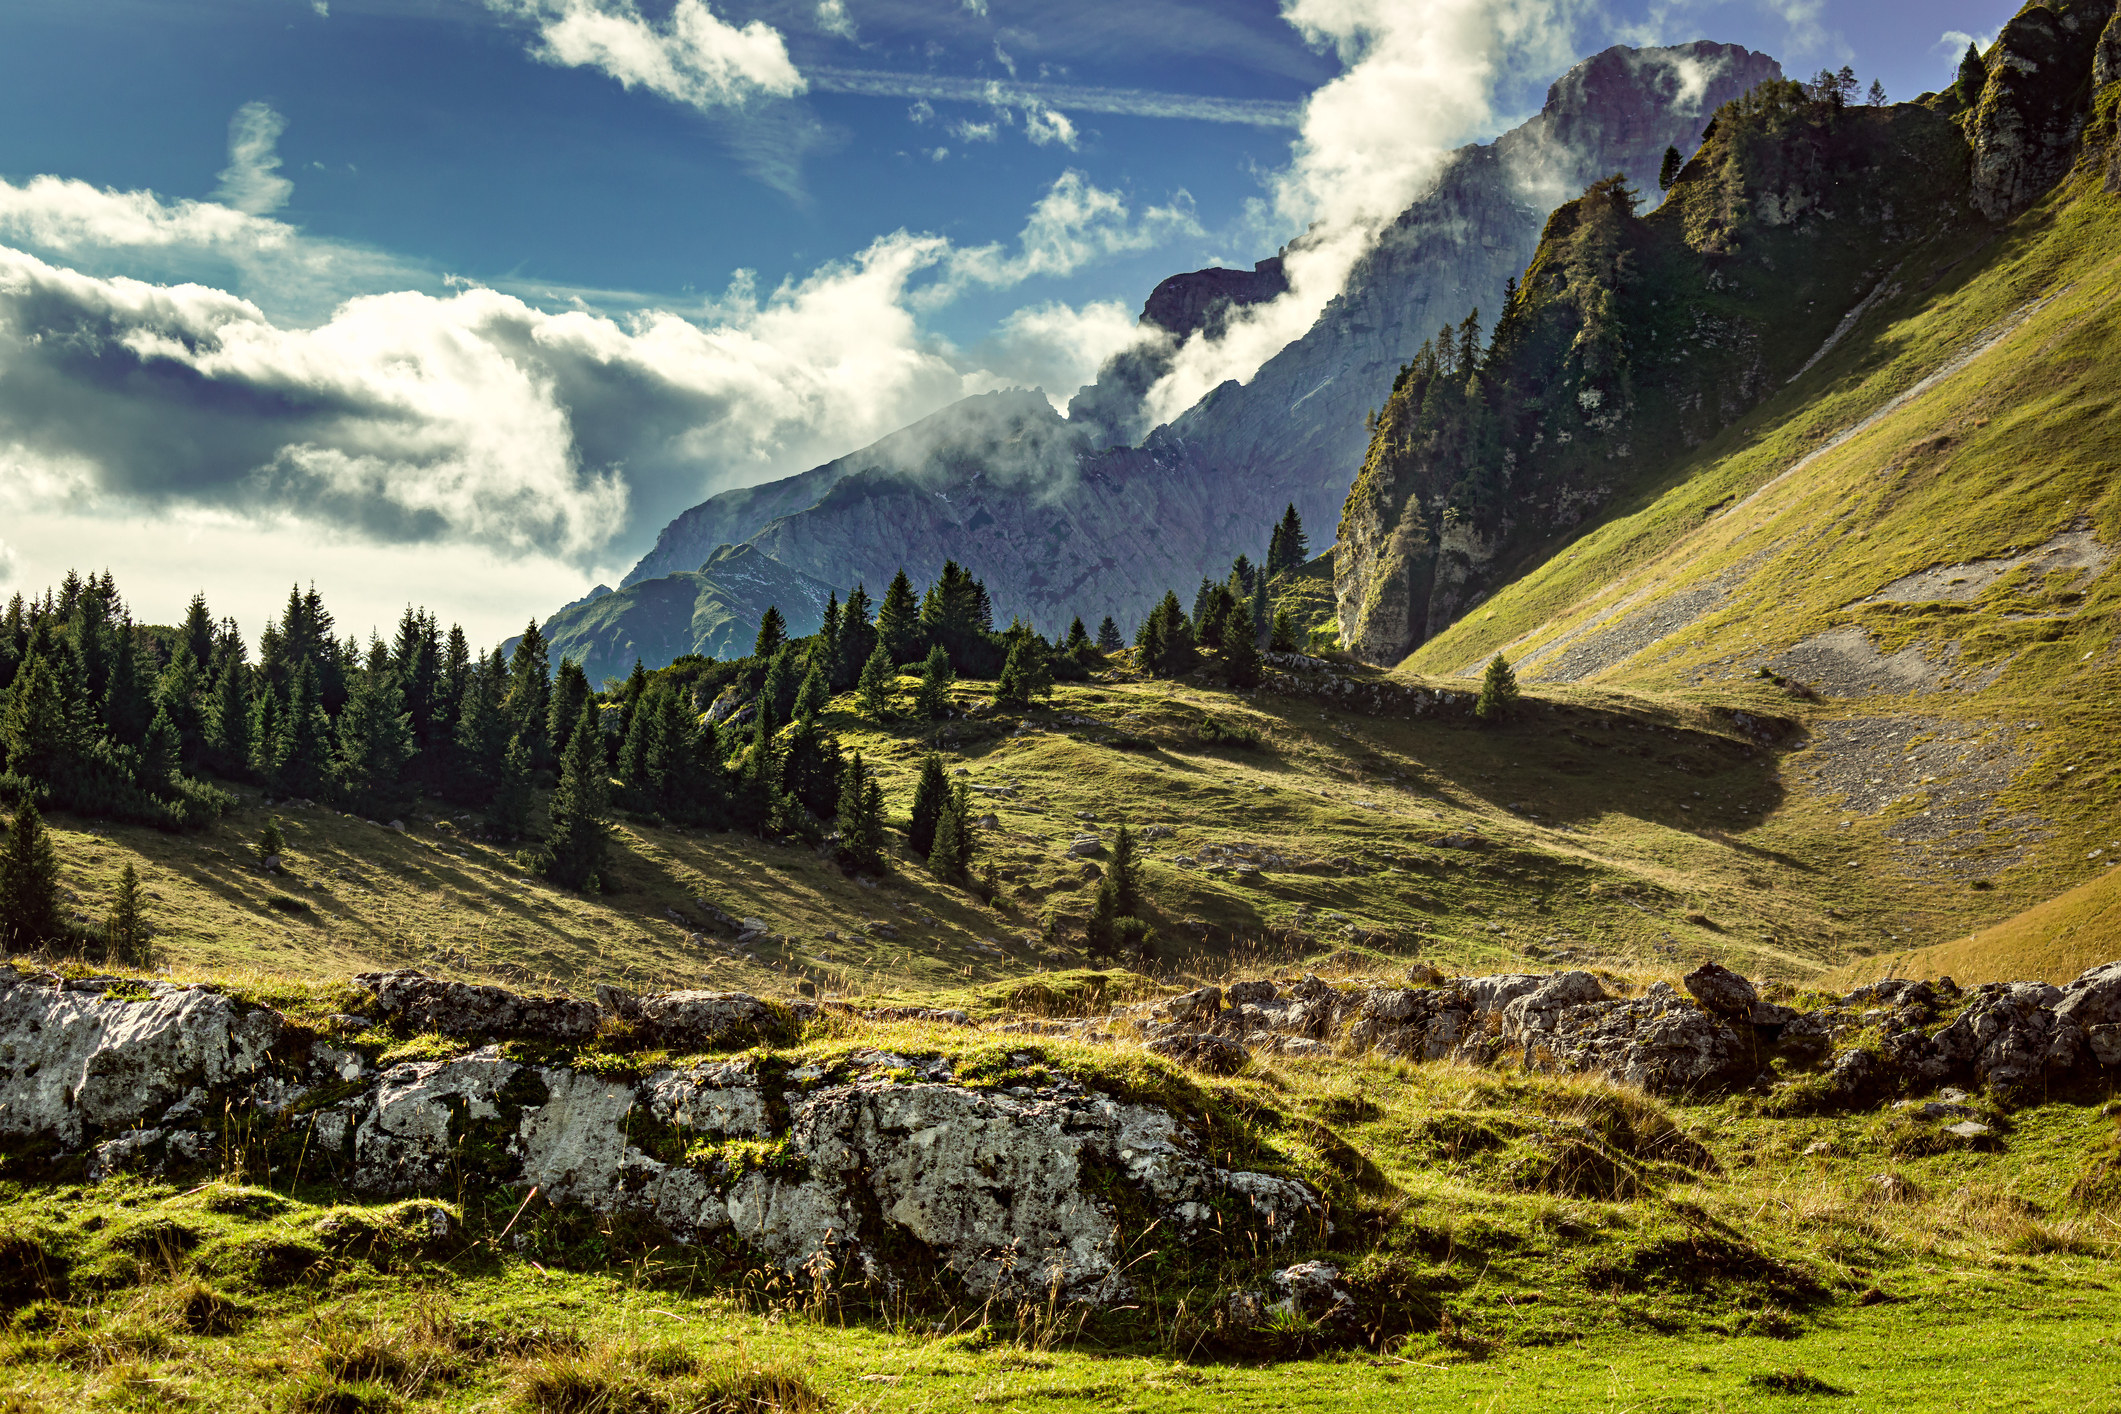 A mountain landscape at Dolomiti Bellunesi National Park.